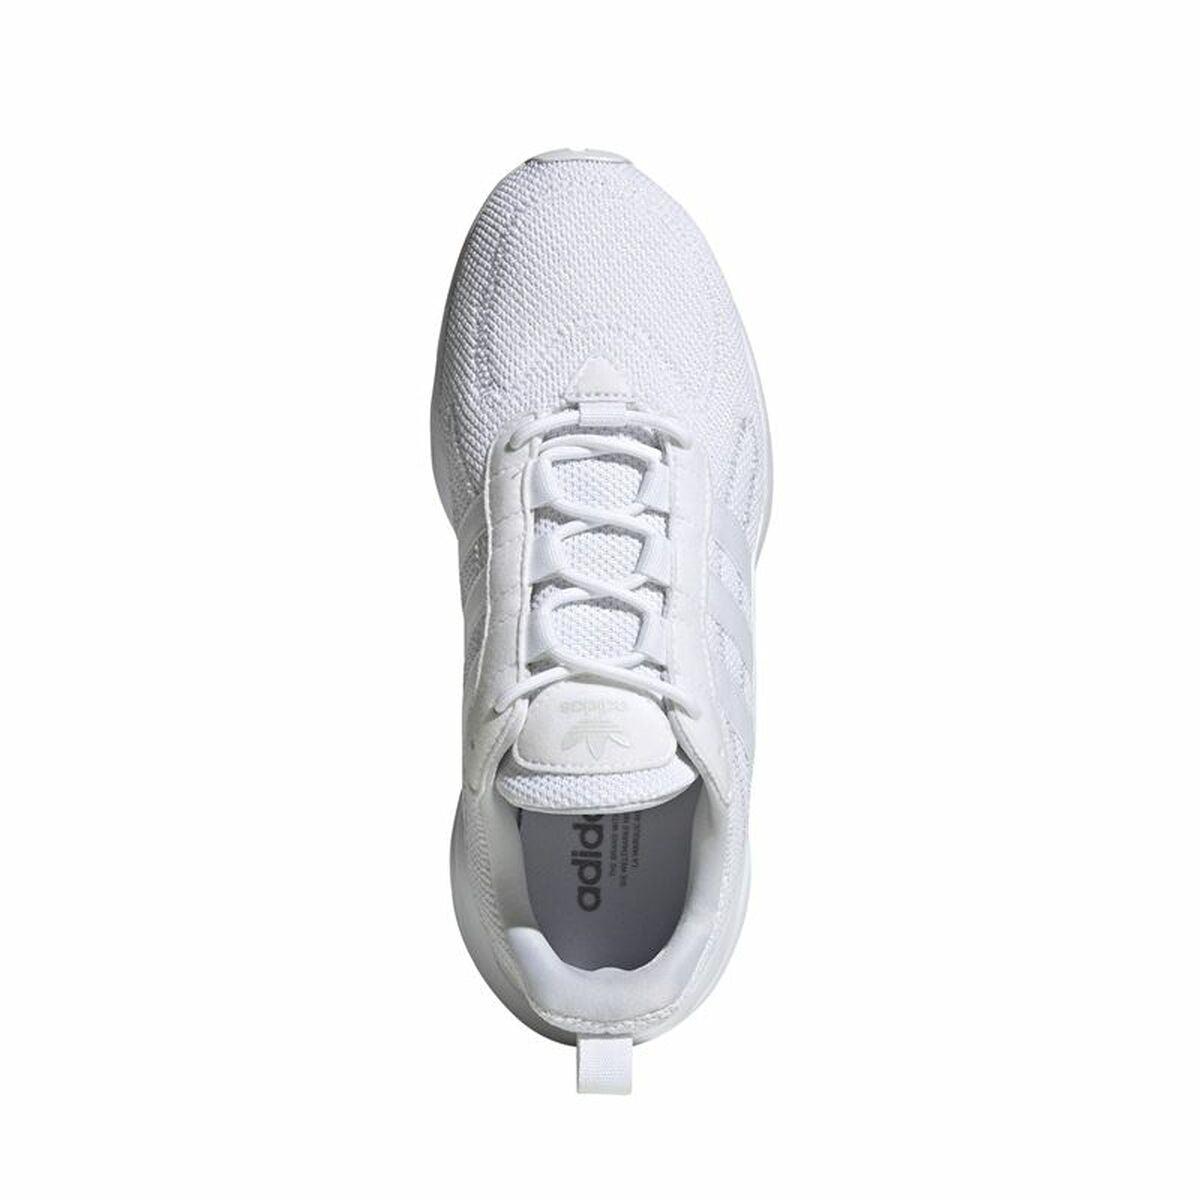 Scarpe Sportive Uomo Adidas Originals Haiwee Bianco